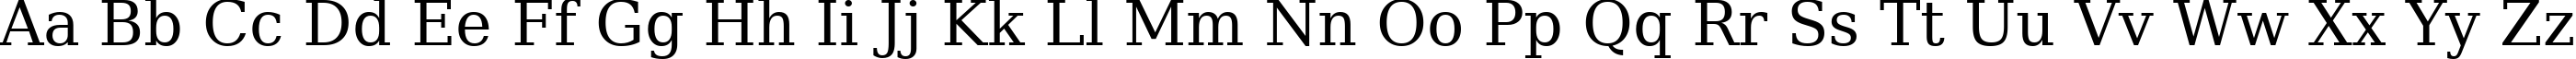 Пример написания английского алфавита шрифтом ae_Tarablus